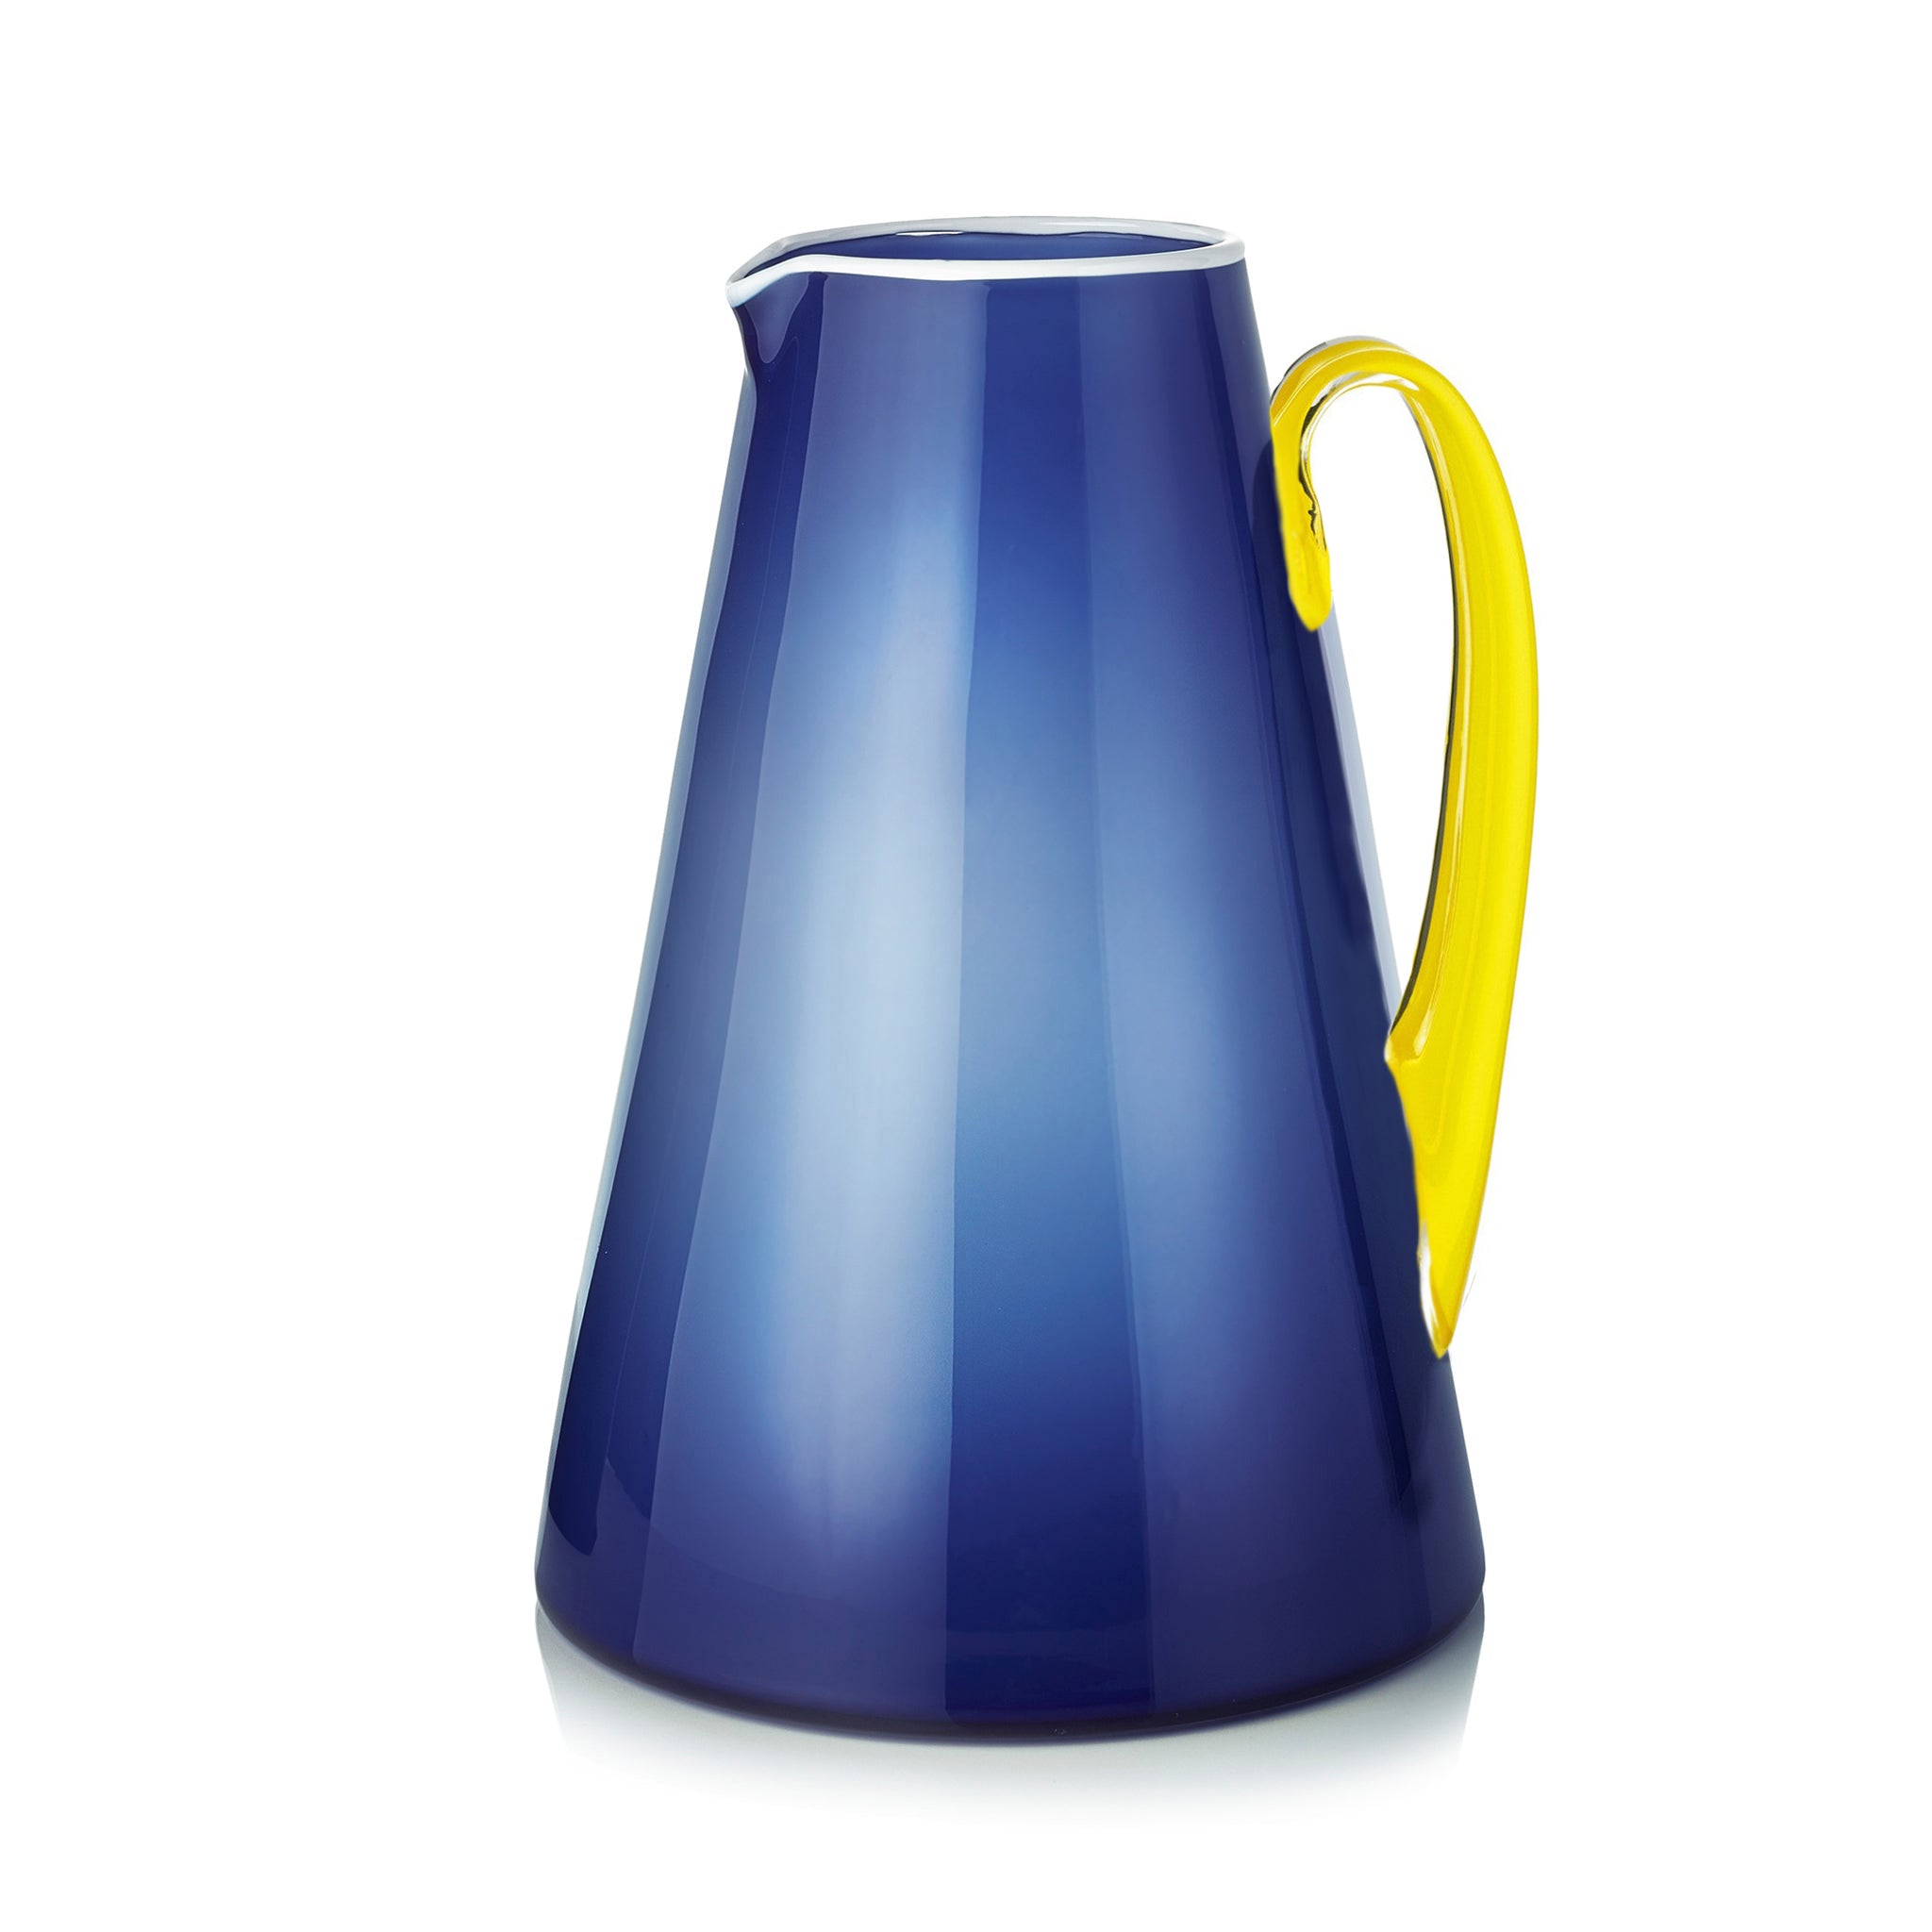 Handblown Glass Bumba Jug in Midnight Blue and Lemon Yellow, 3lt